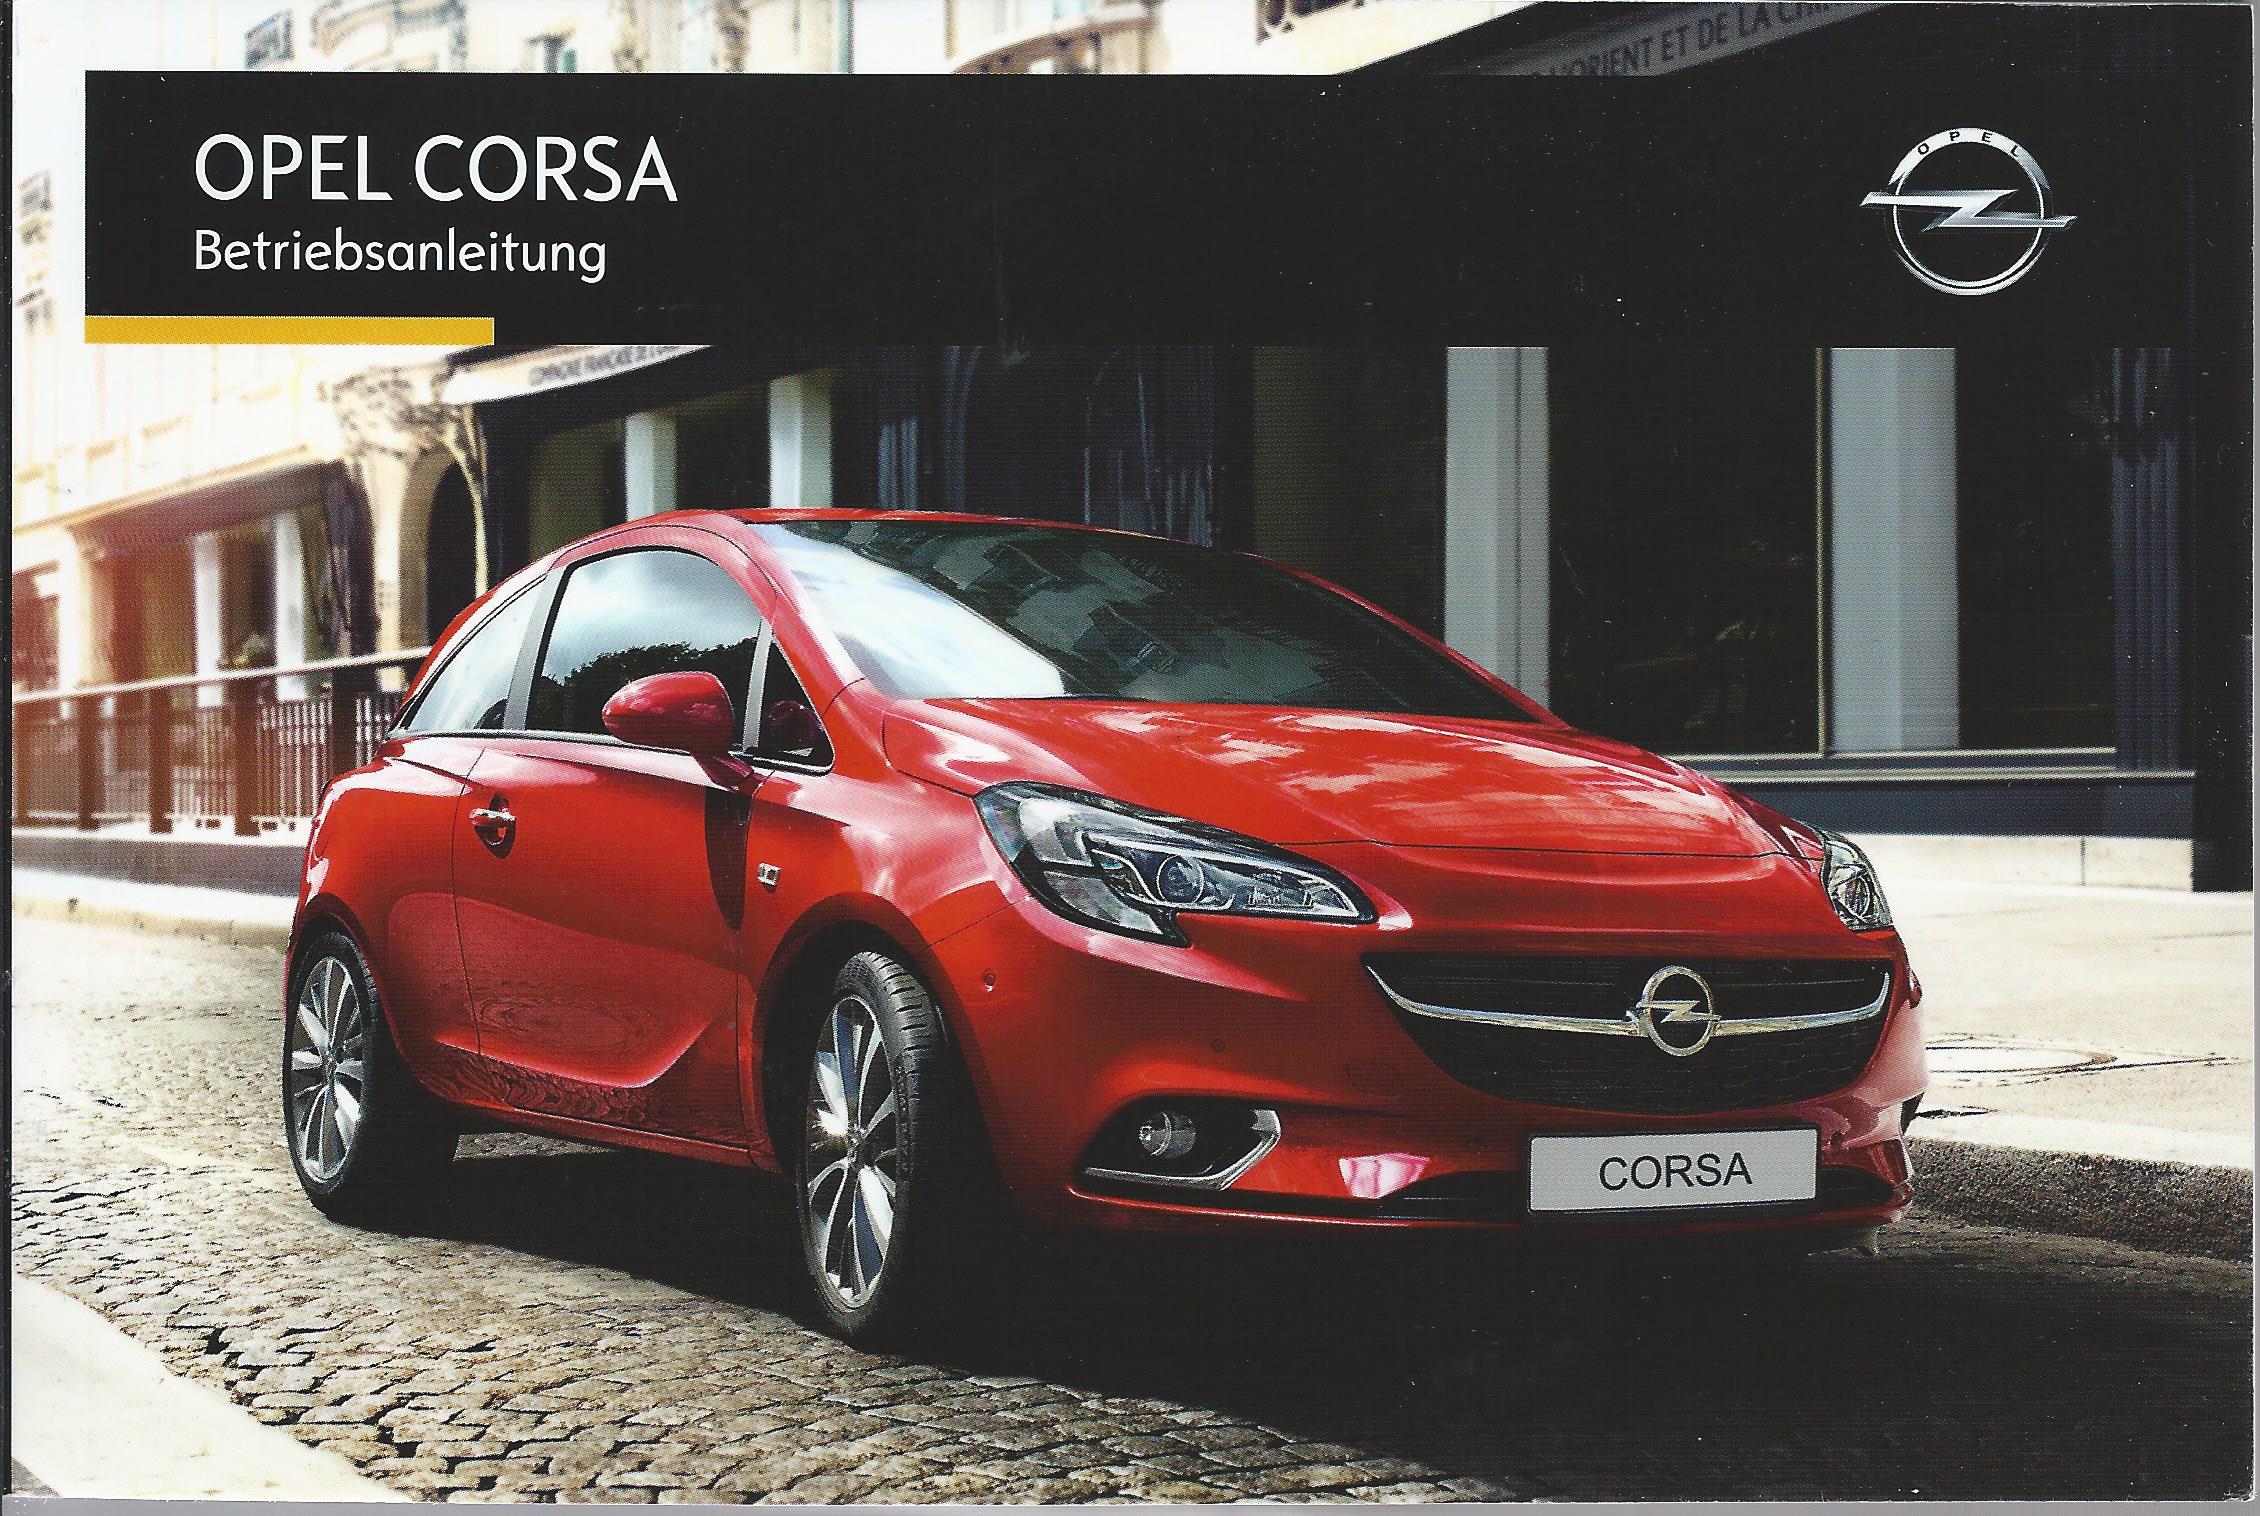 Opel Corsa E Betriebsanleitung 16 Bedienungsanleitung Handbuch Bordbuch Ba I Ebay